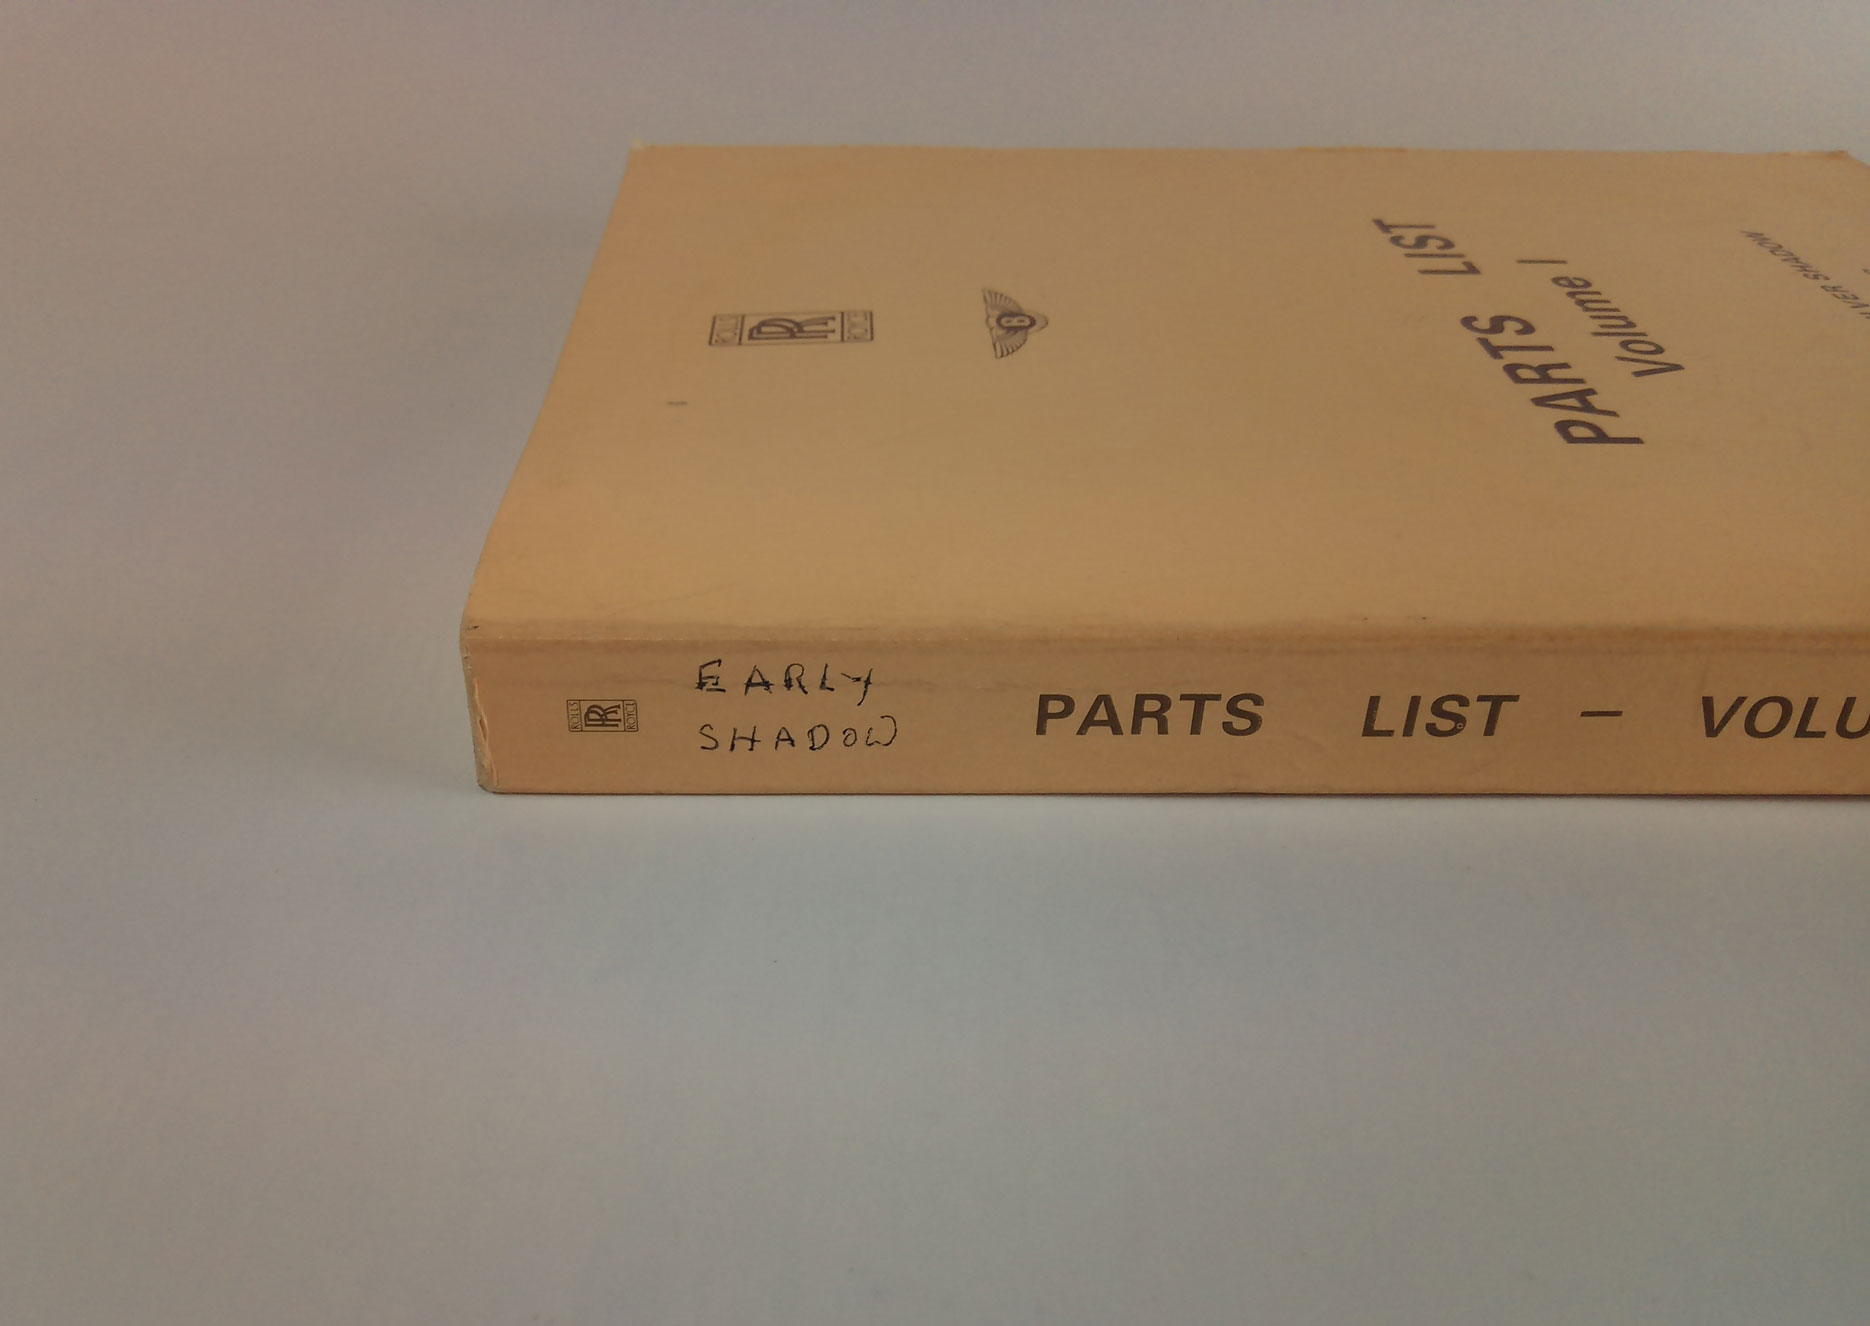 2 volume parts list, 1981 reprint - Image 4 of 4